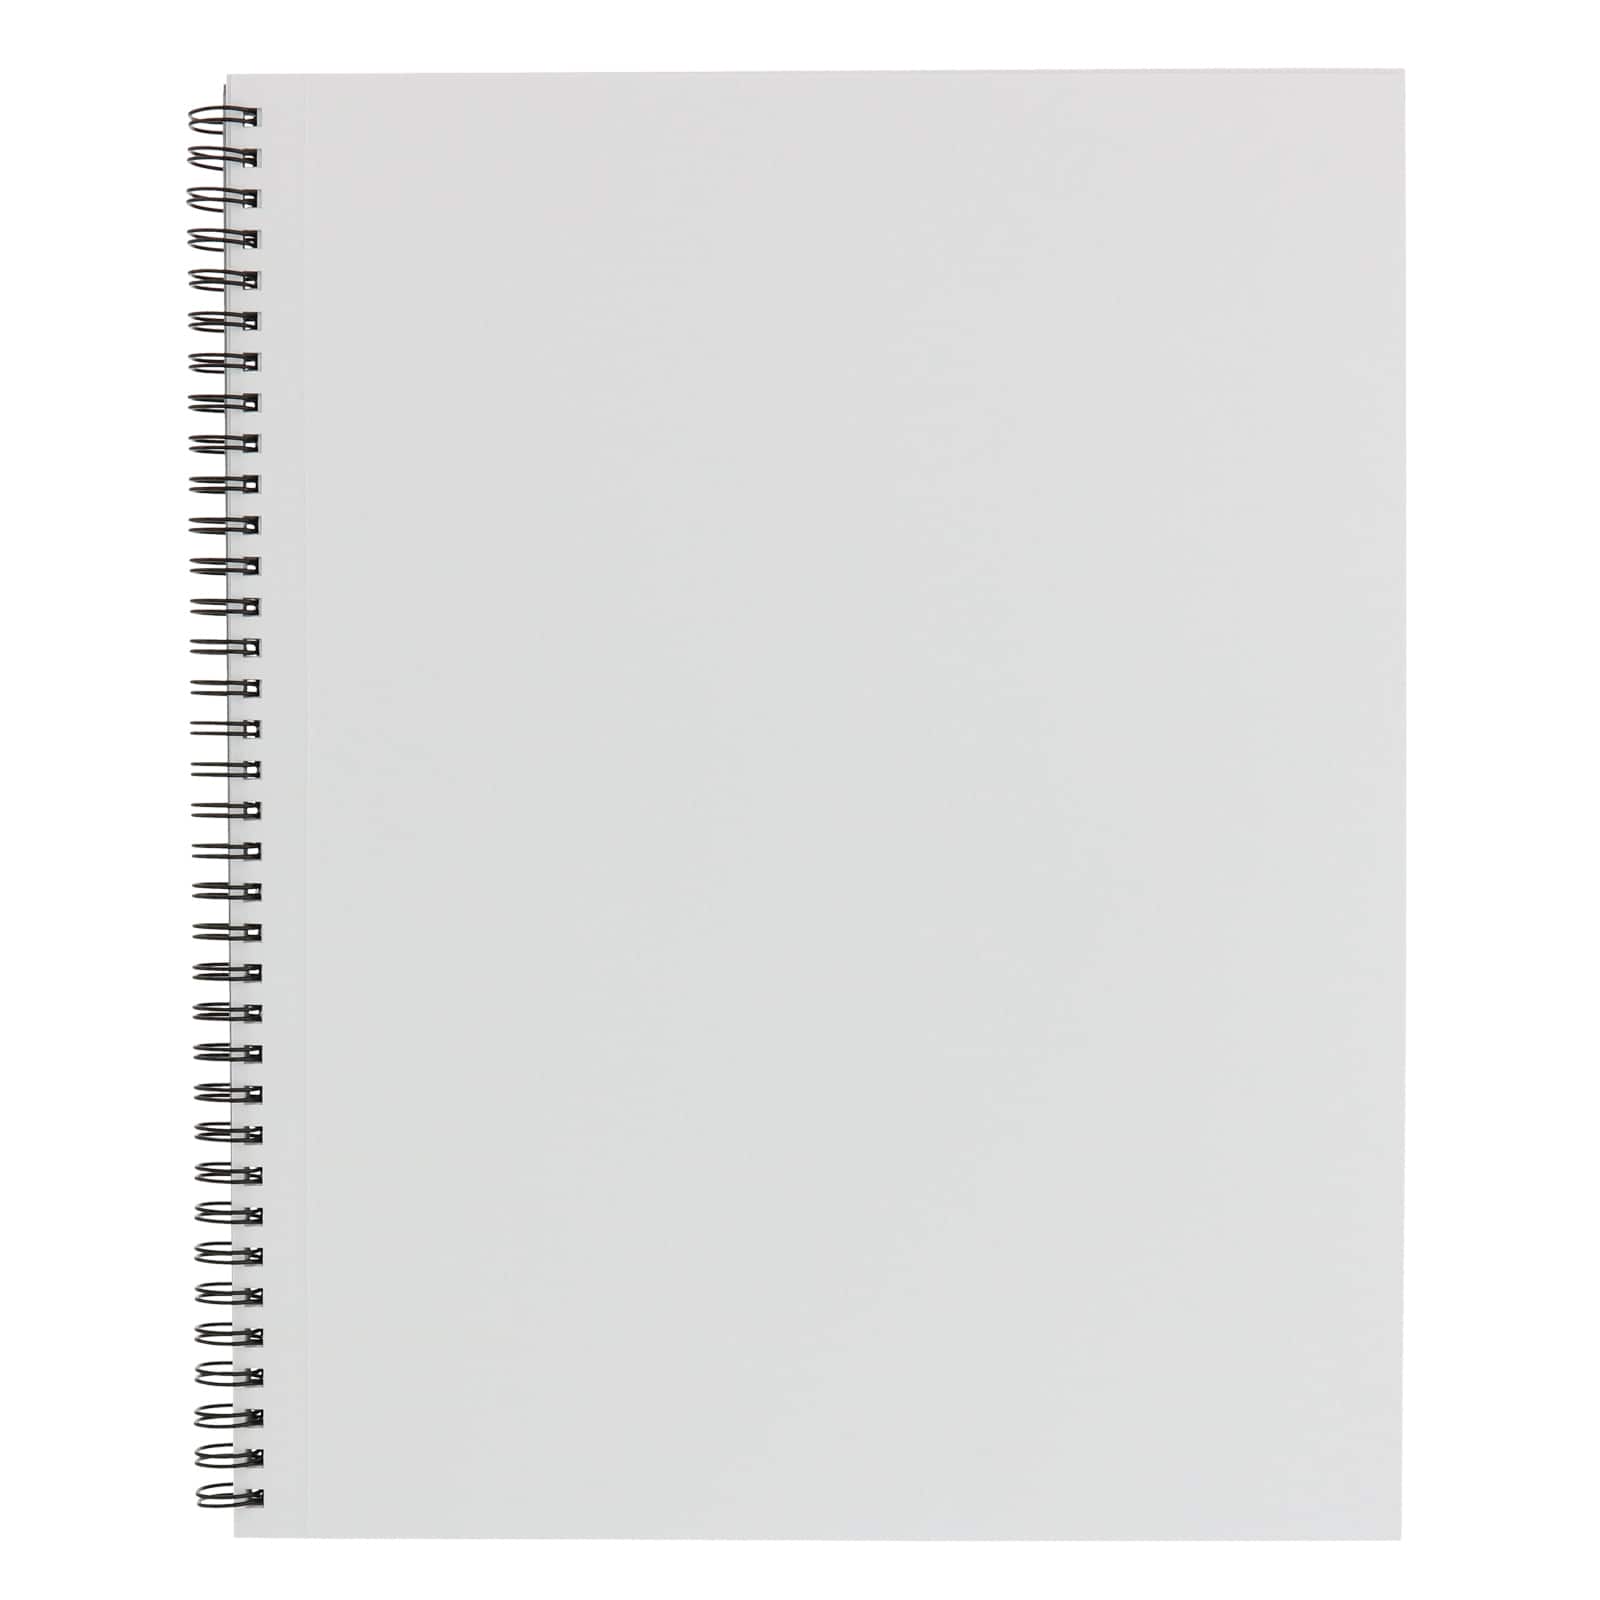 Mixed Media Heavy Weight Paper Pad by Artist&#x27;s Loft&#x2122;